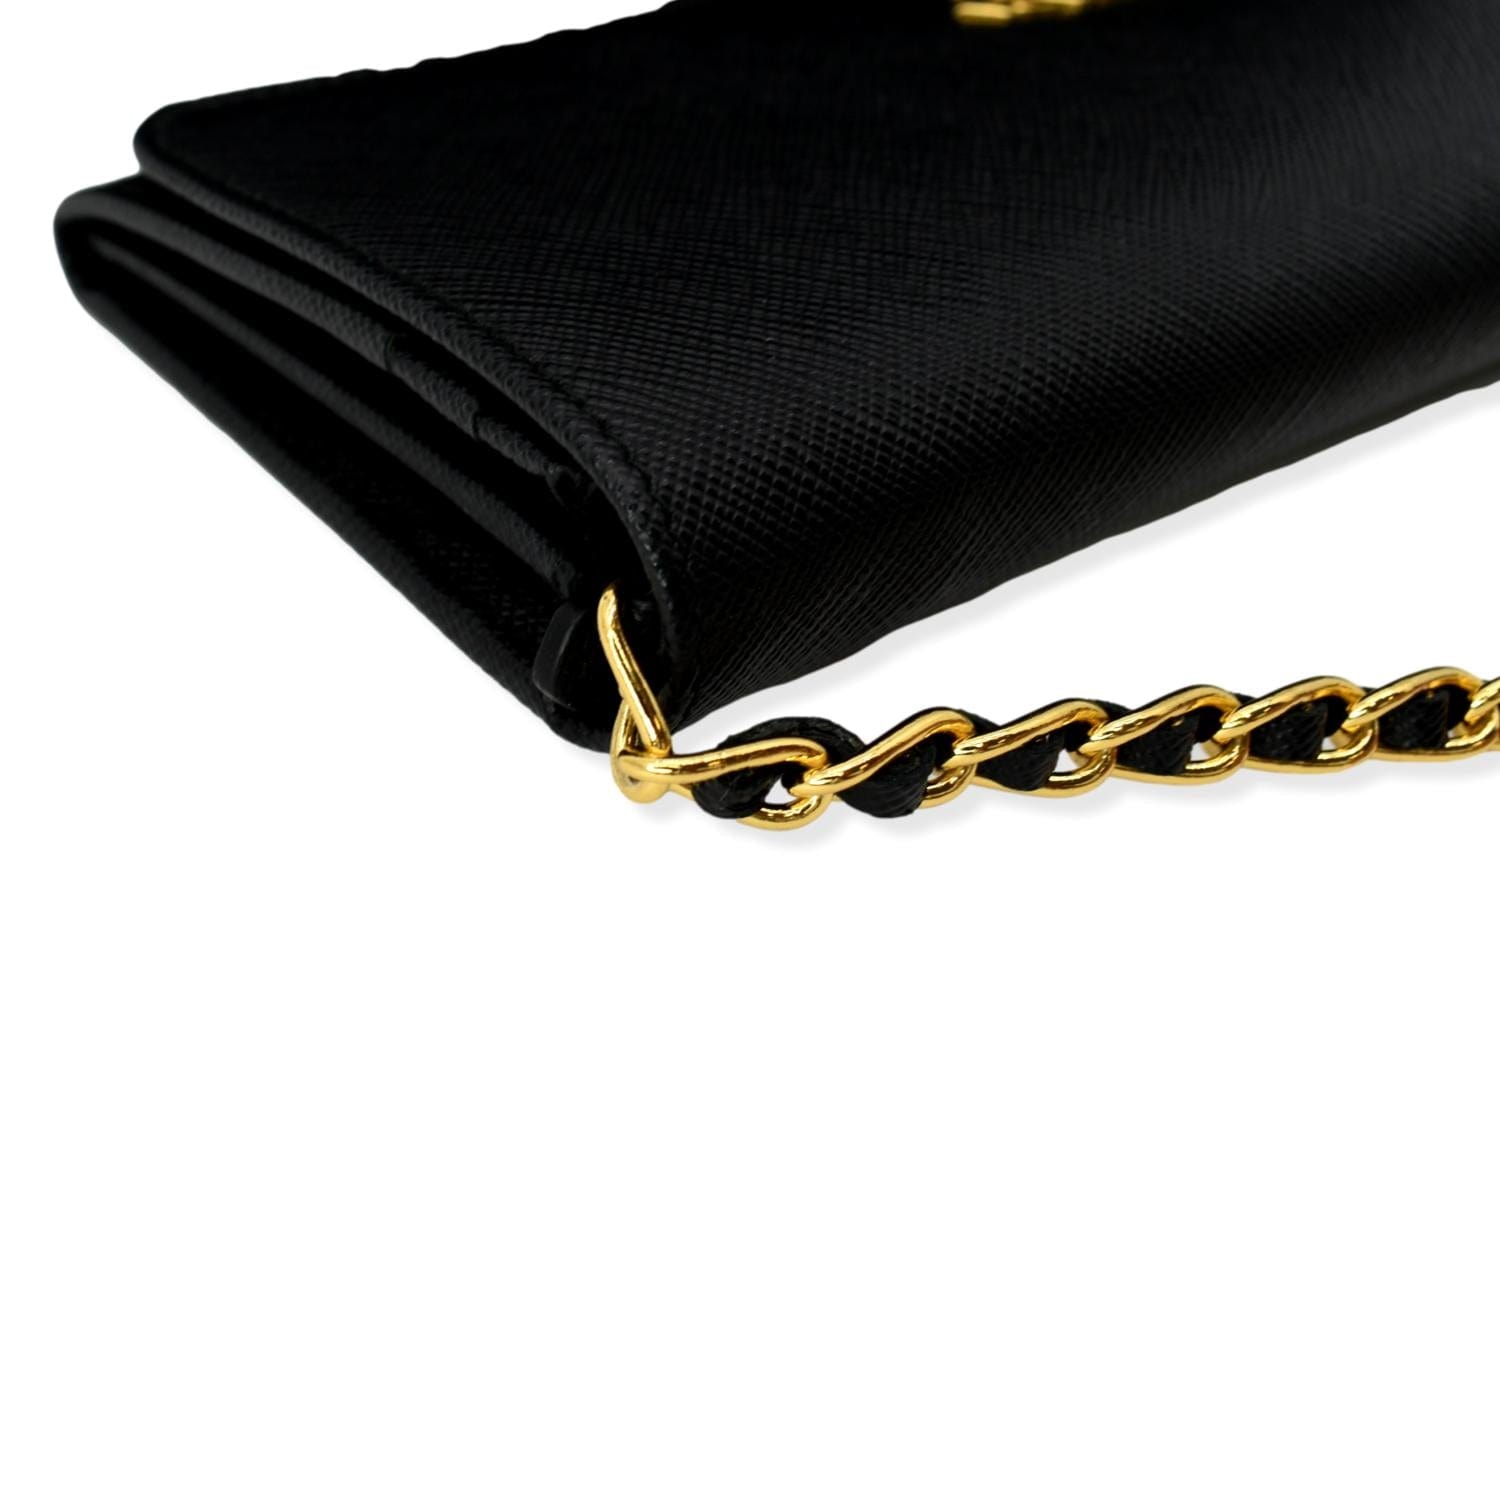 Prada Pattina Patent Saffiano Leather Shoulder Bag